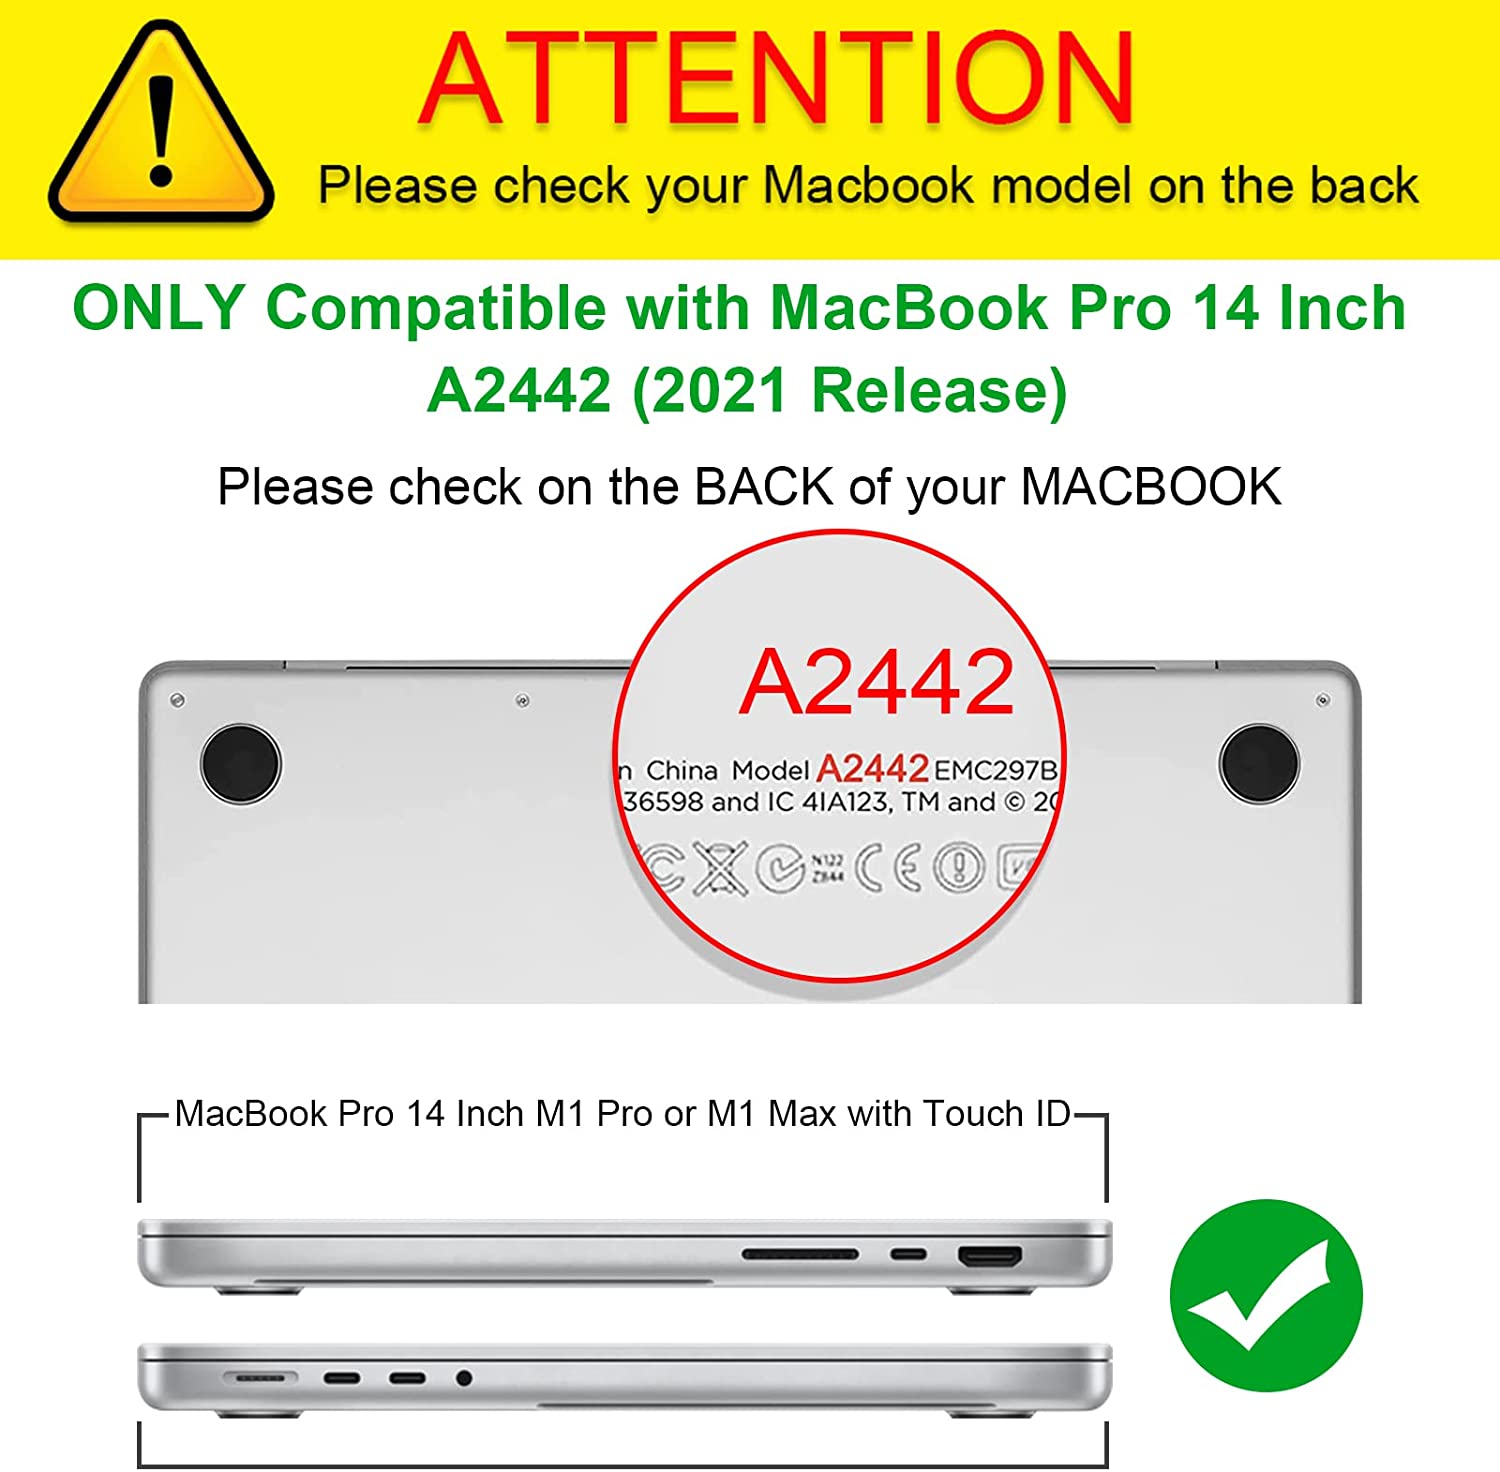 FINTIE Coque Compatible avec MacBook Air 13 M1 (A2337) / MacBook